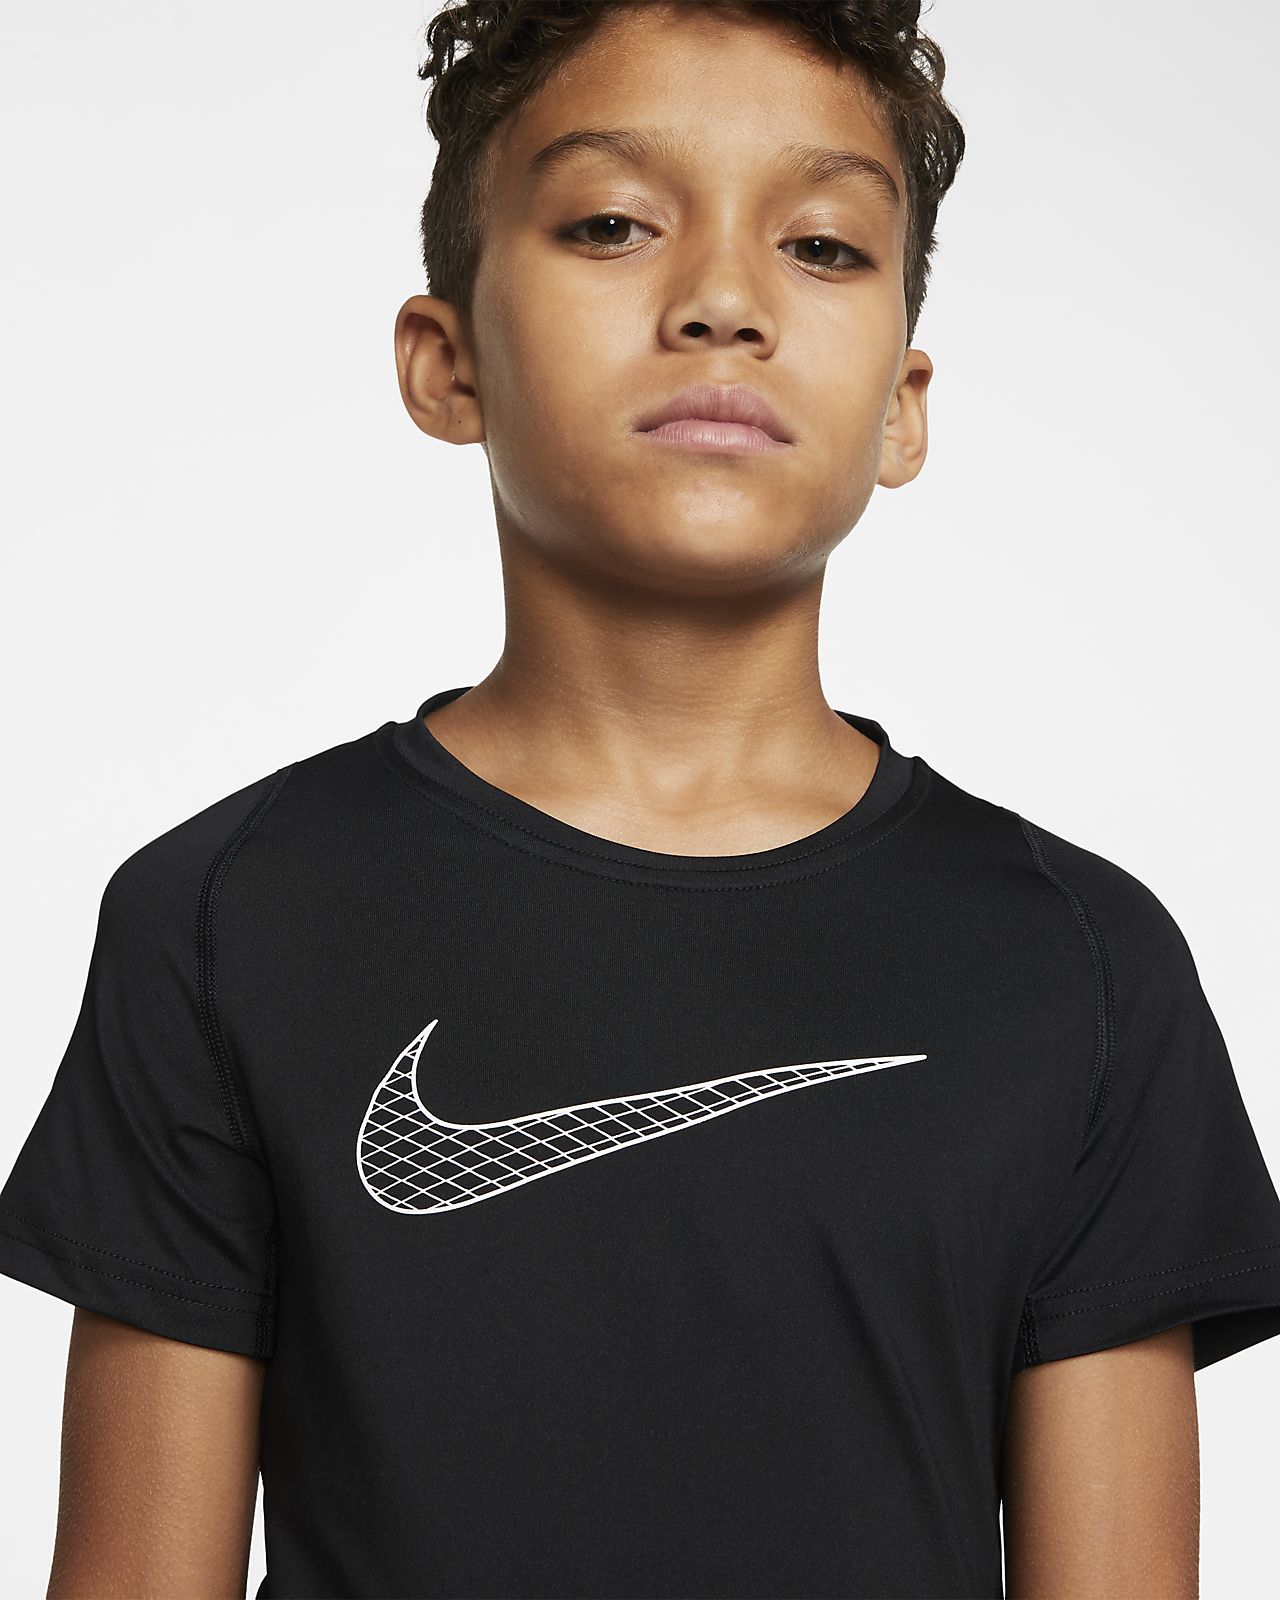 Black Nike Kids Short Sleeve Shirt Size 6 White Just Do It 7 Boys Kids Boys